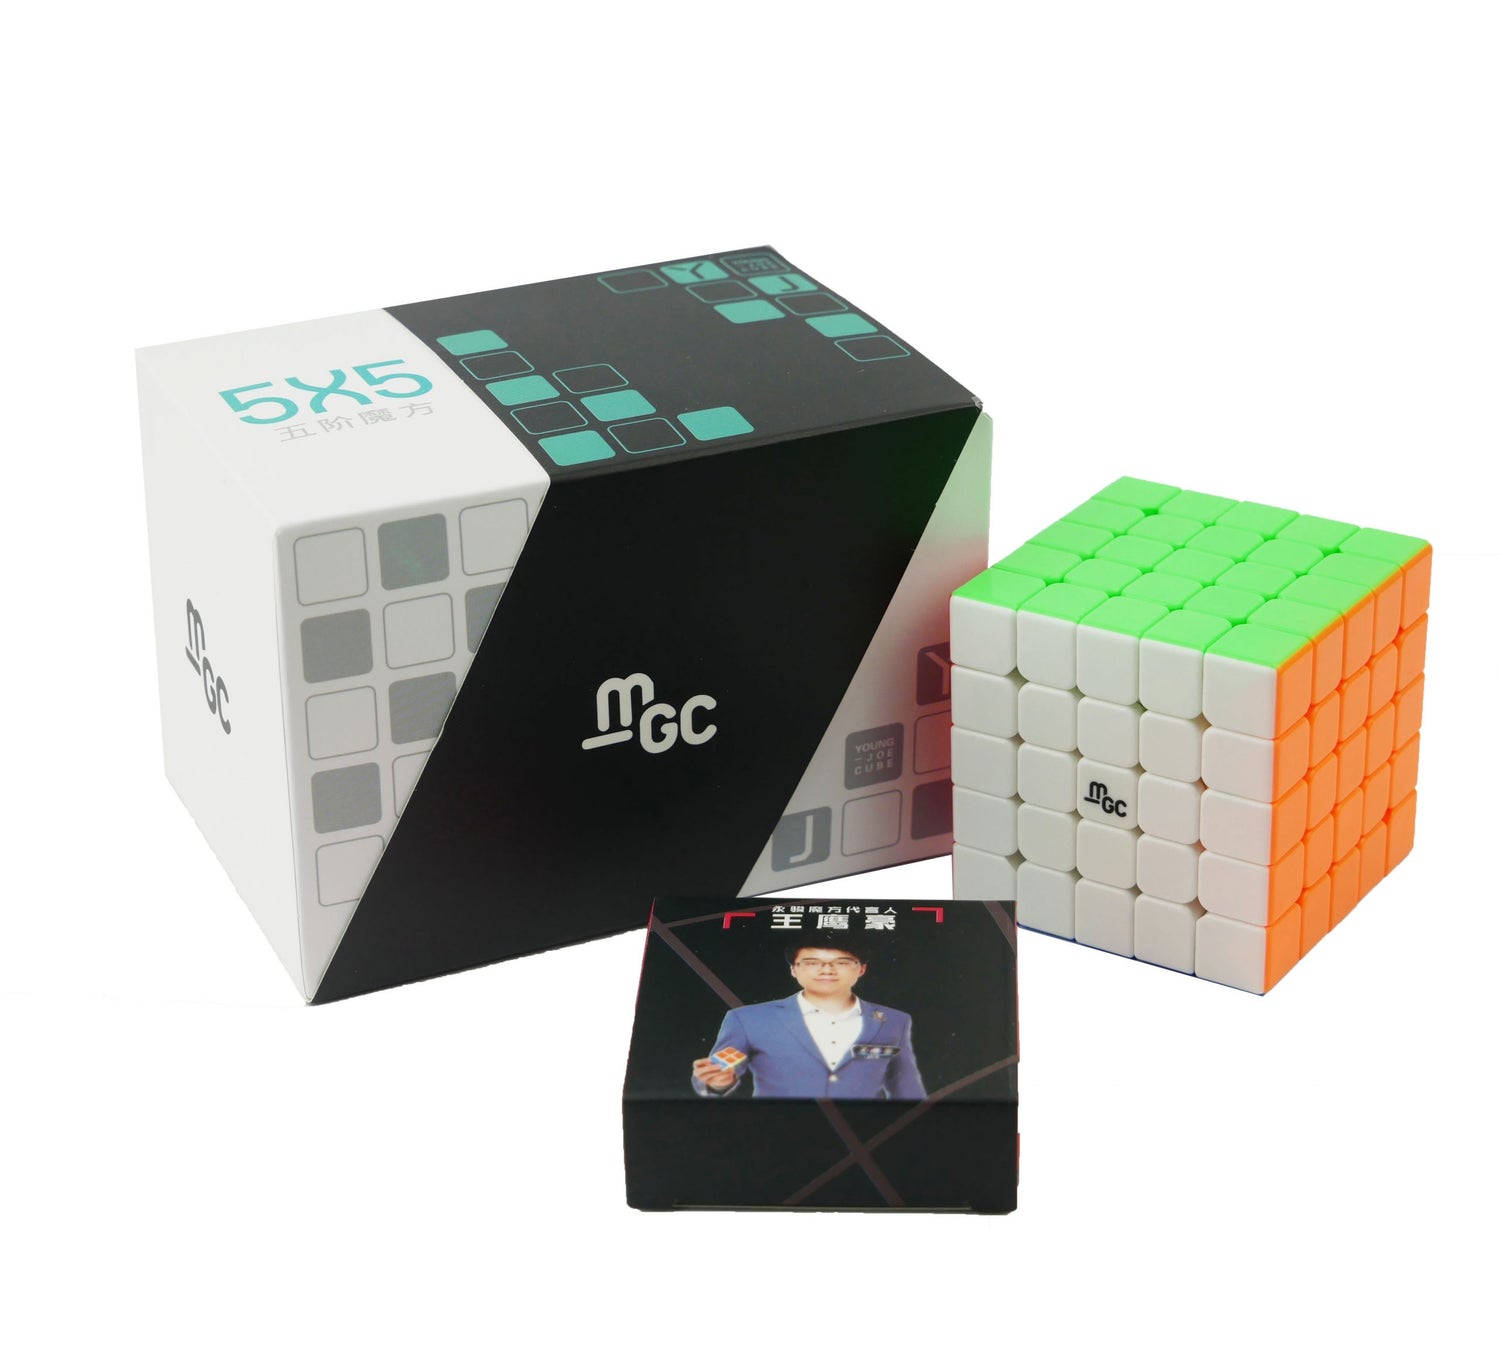 5x5 Rubik's Cube